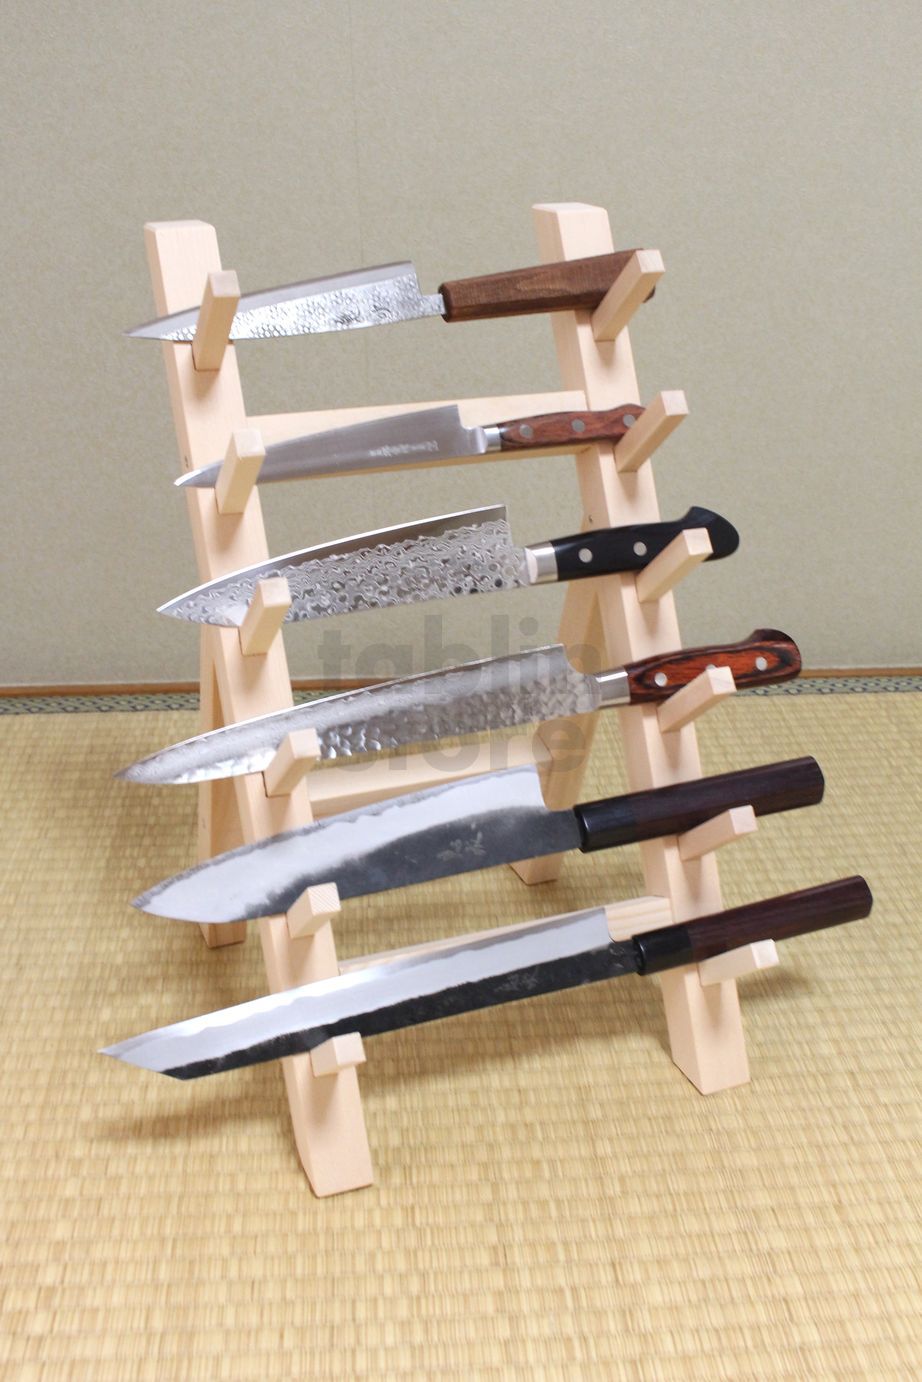 Stand knife 2.2 f2. Подставки для коллекционных ножей. Подставка для коллекции ножей. Набор деревянных ножей. Подставка для ножей деревянная.